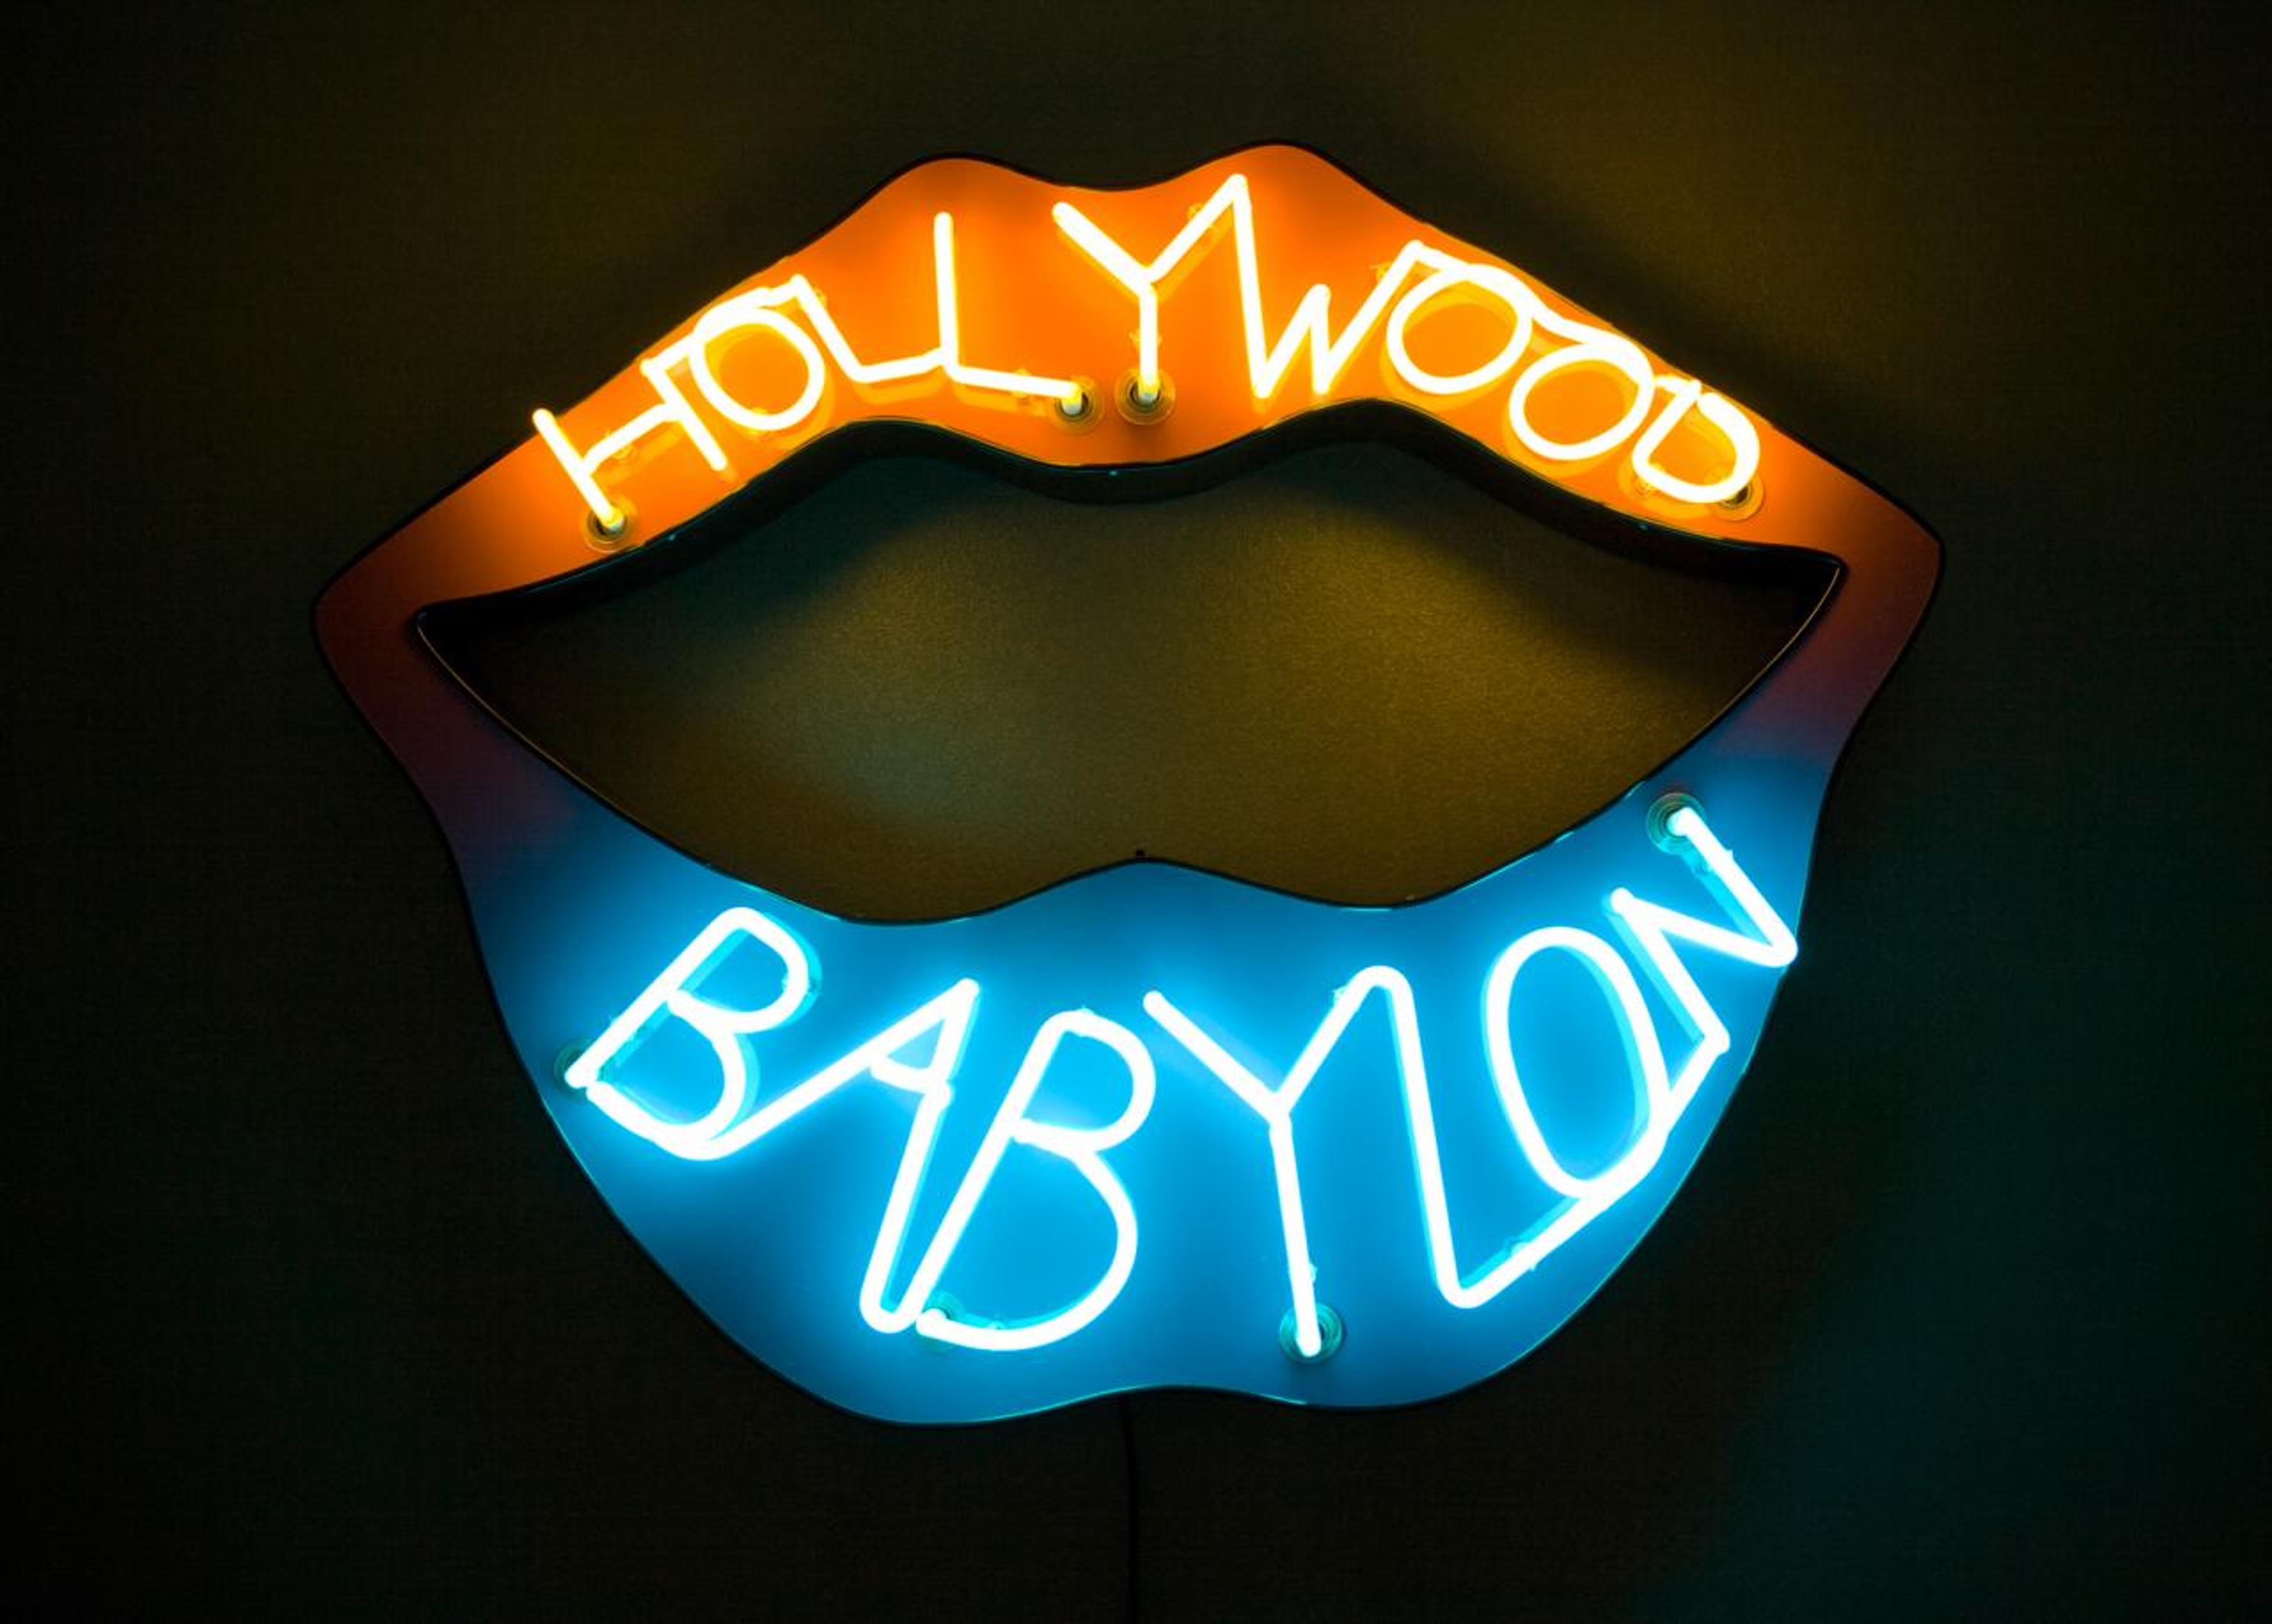 Kenneth Anger, Hollywood Babylon, 1975/2000, neon and plexiglass, 87 x 110 x 15 cm